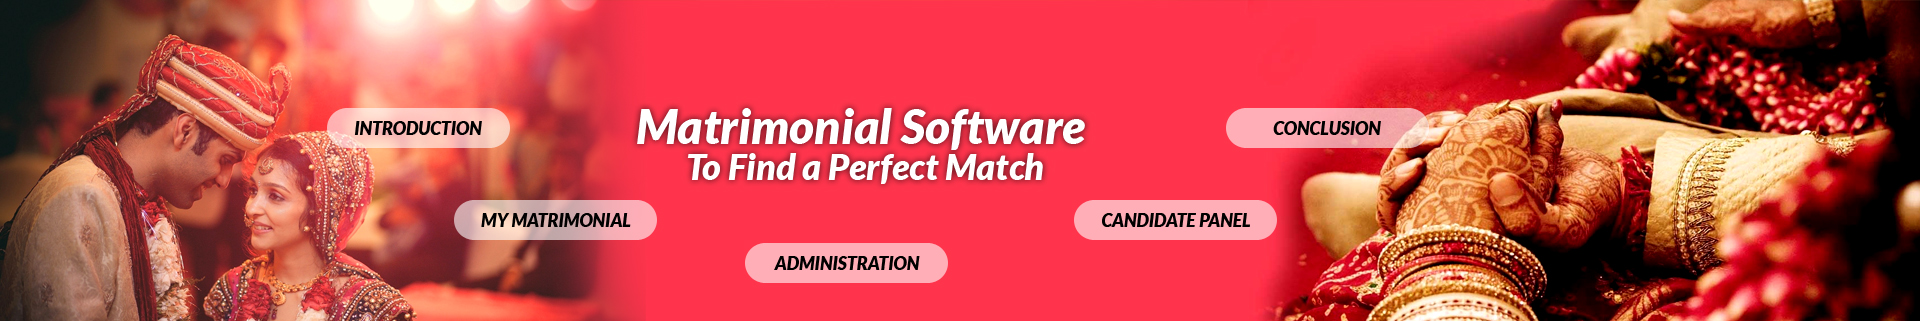 Matrimonial Software